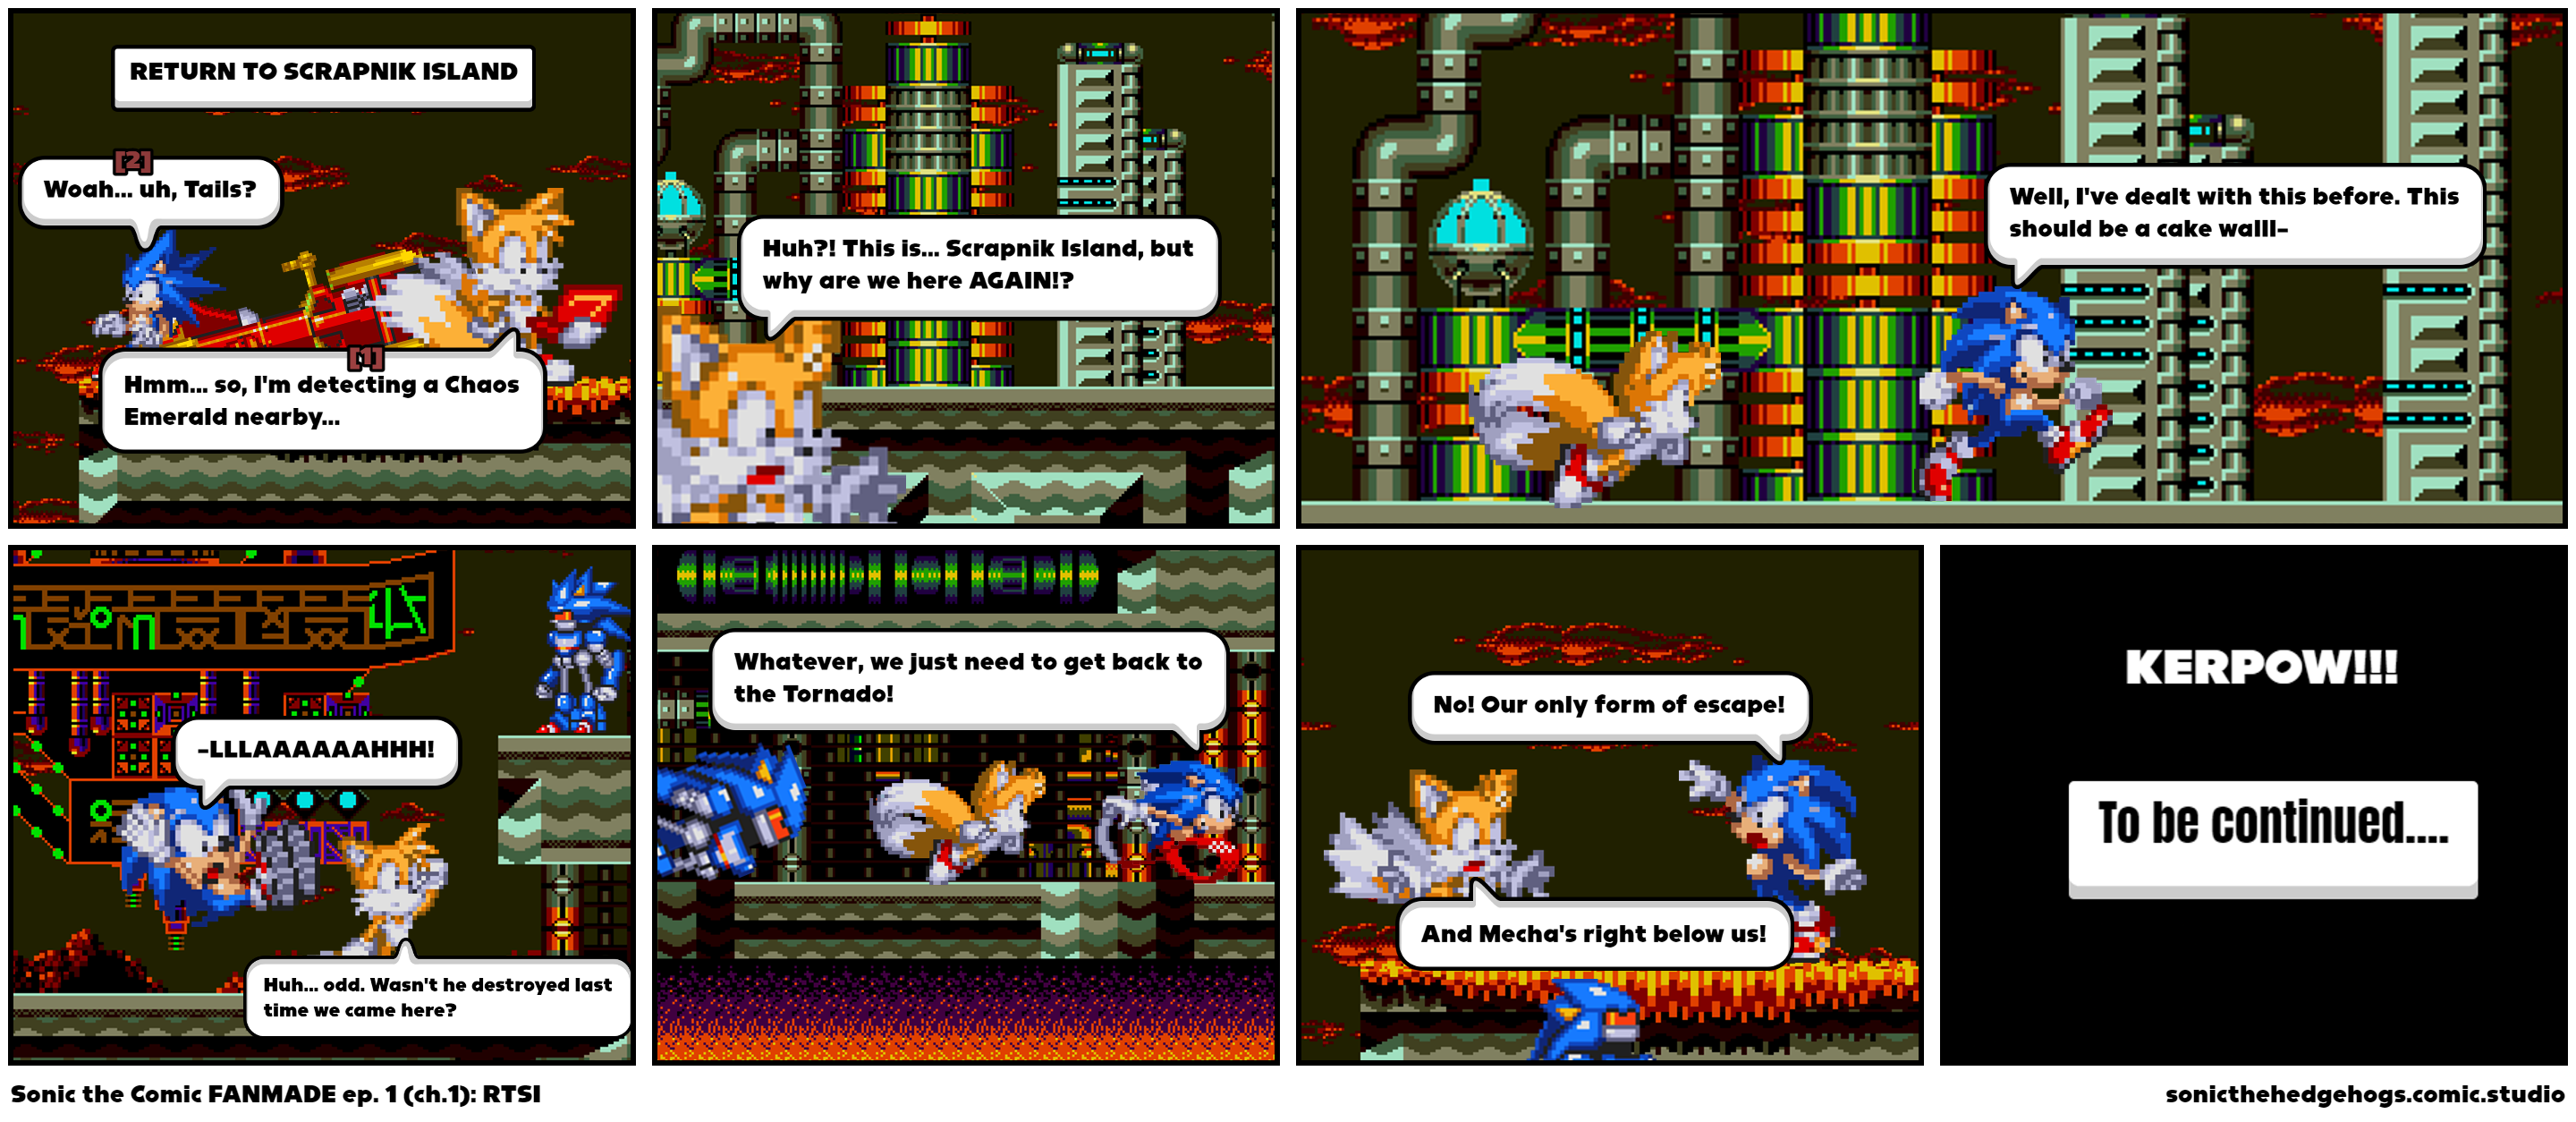 Sonic the Comic FANMADE ep. 1 (ch.1): RTSI